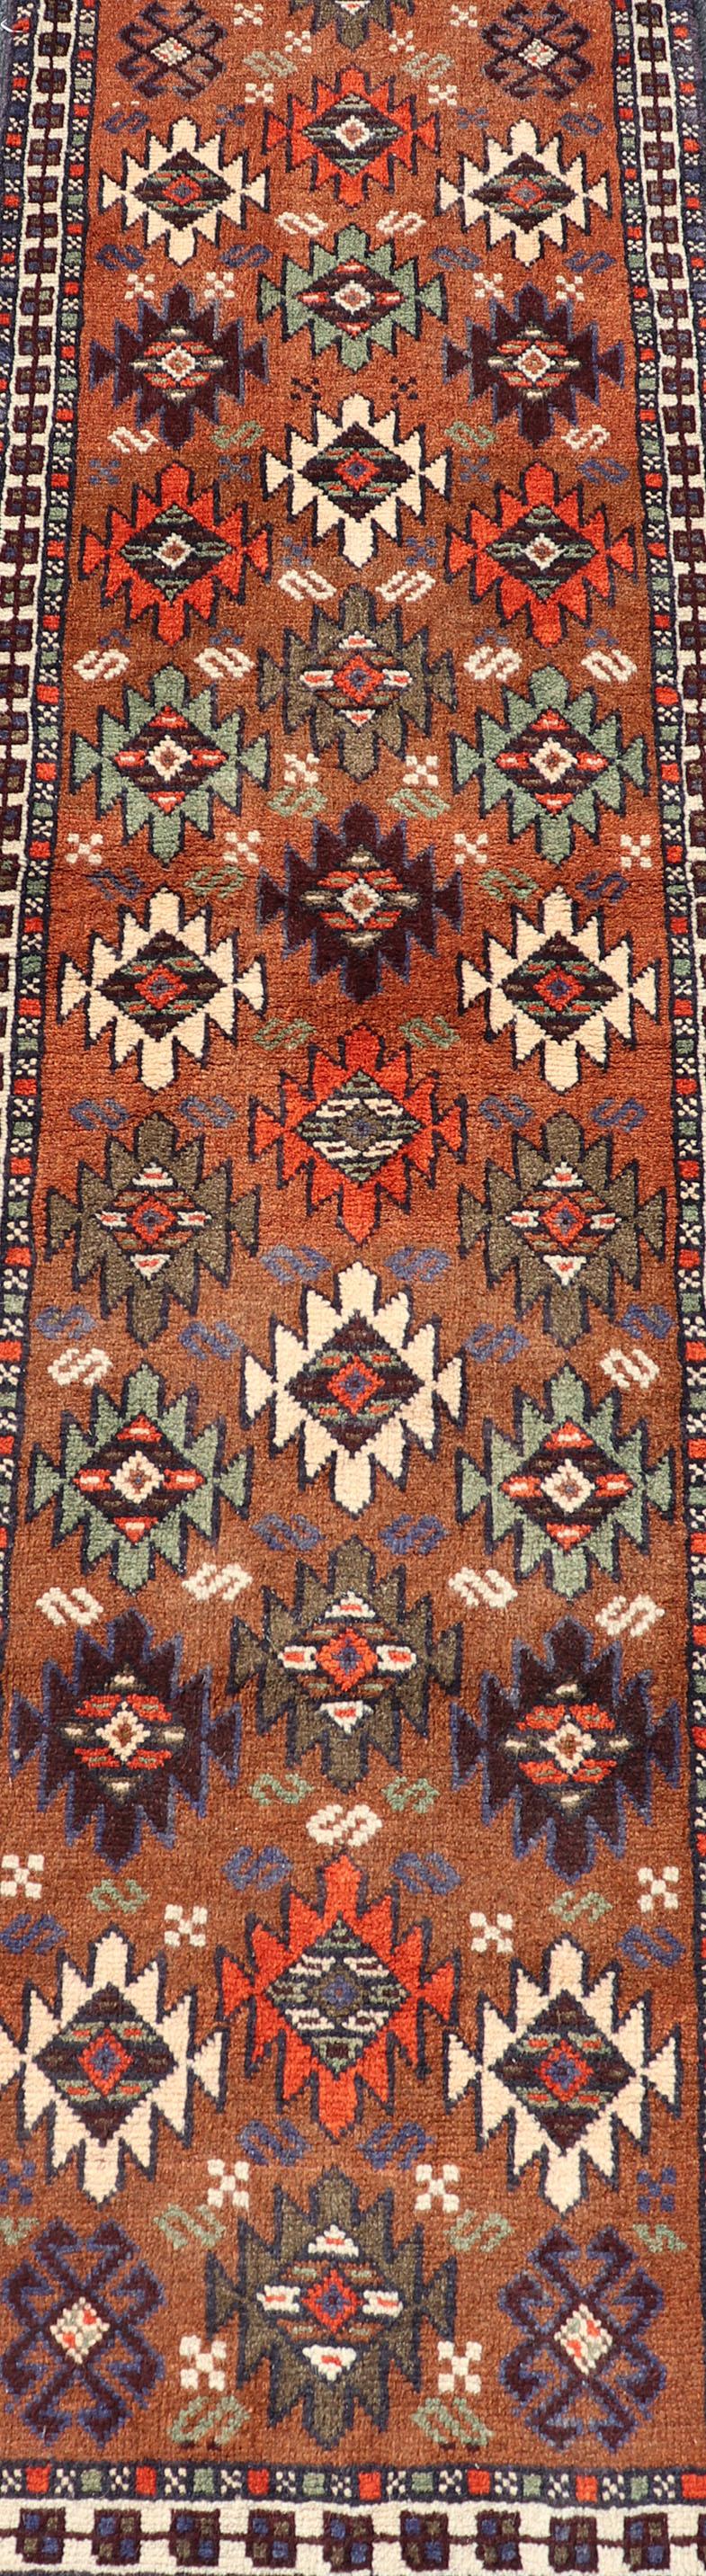 Wool Vintage Turkish Kars Runner with Tribal Motif Design in Orange-Brown Colors For Sale